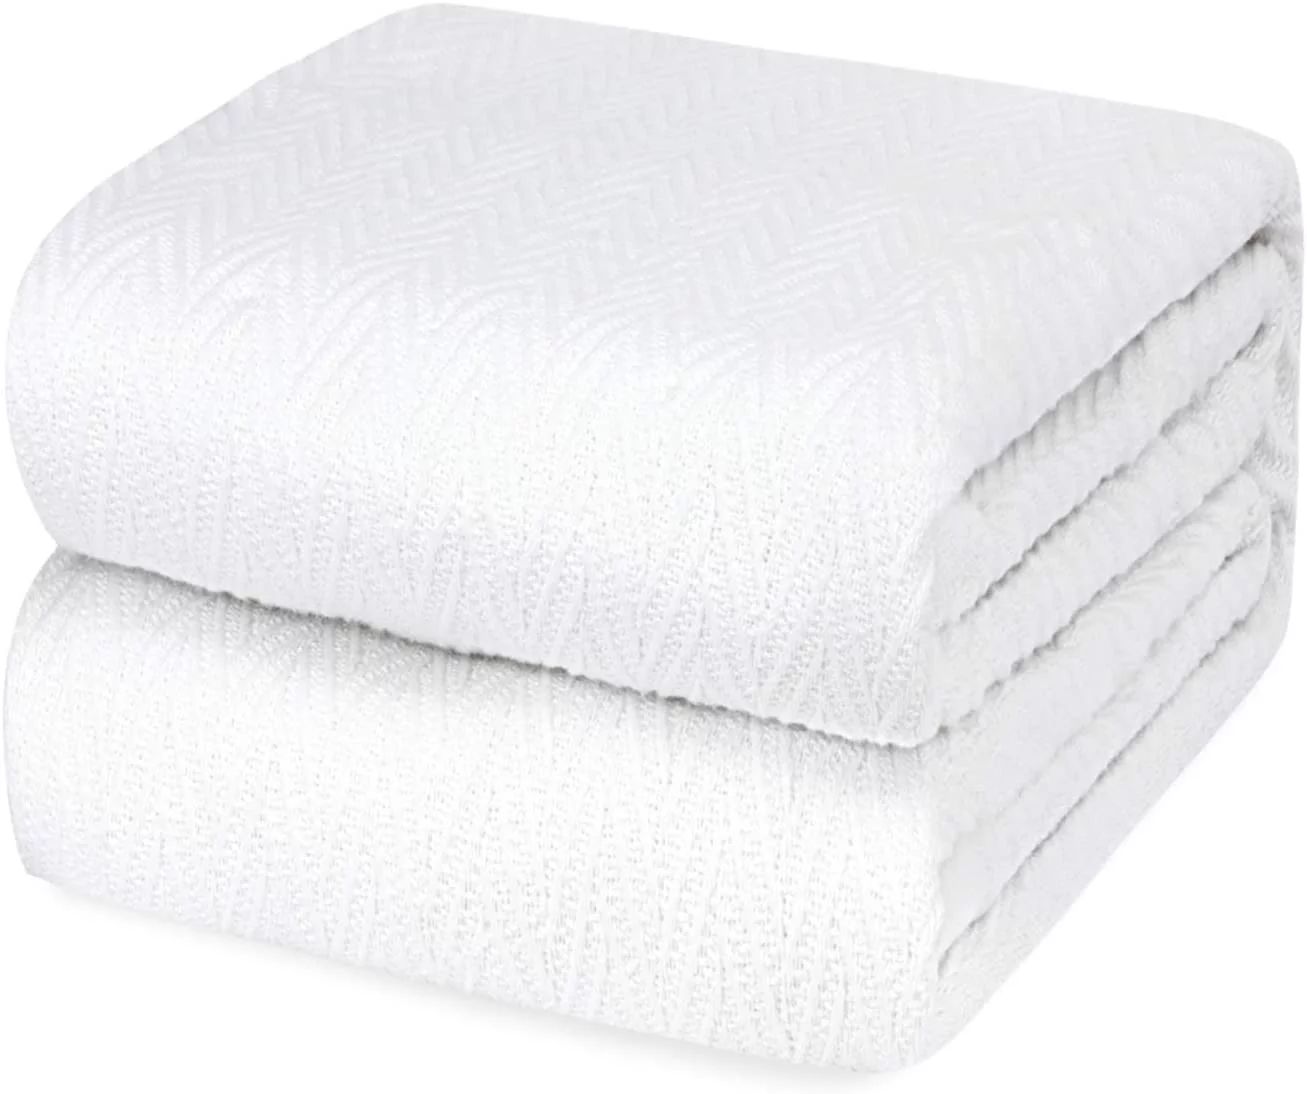 Luxury Thermal Cotton Blankets, King Size- White | Walmart (US)